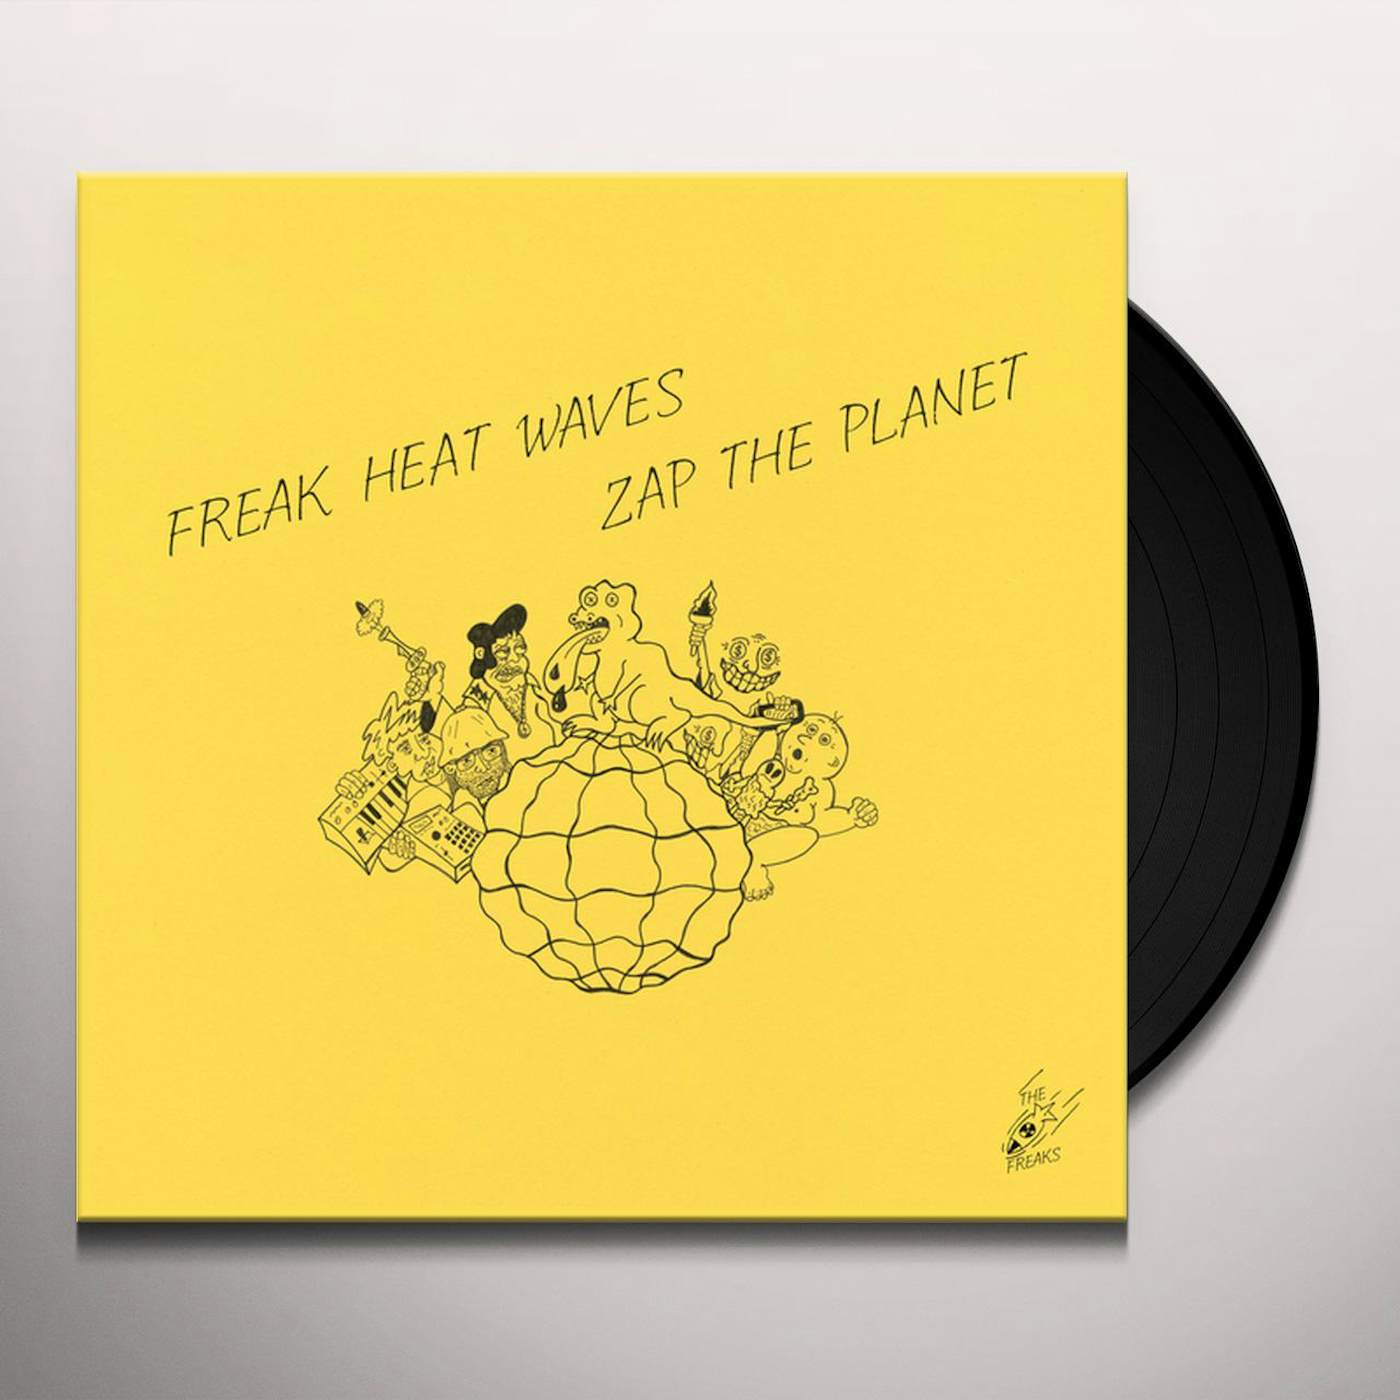 Freak Heat Waves Zap the Planet Vinyl Record